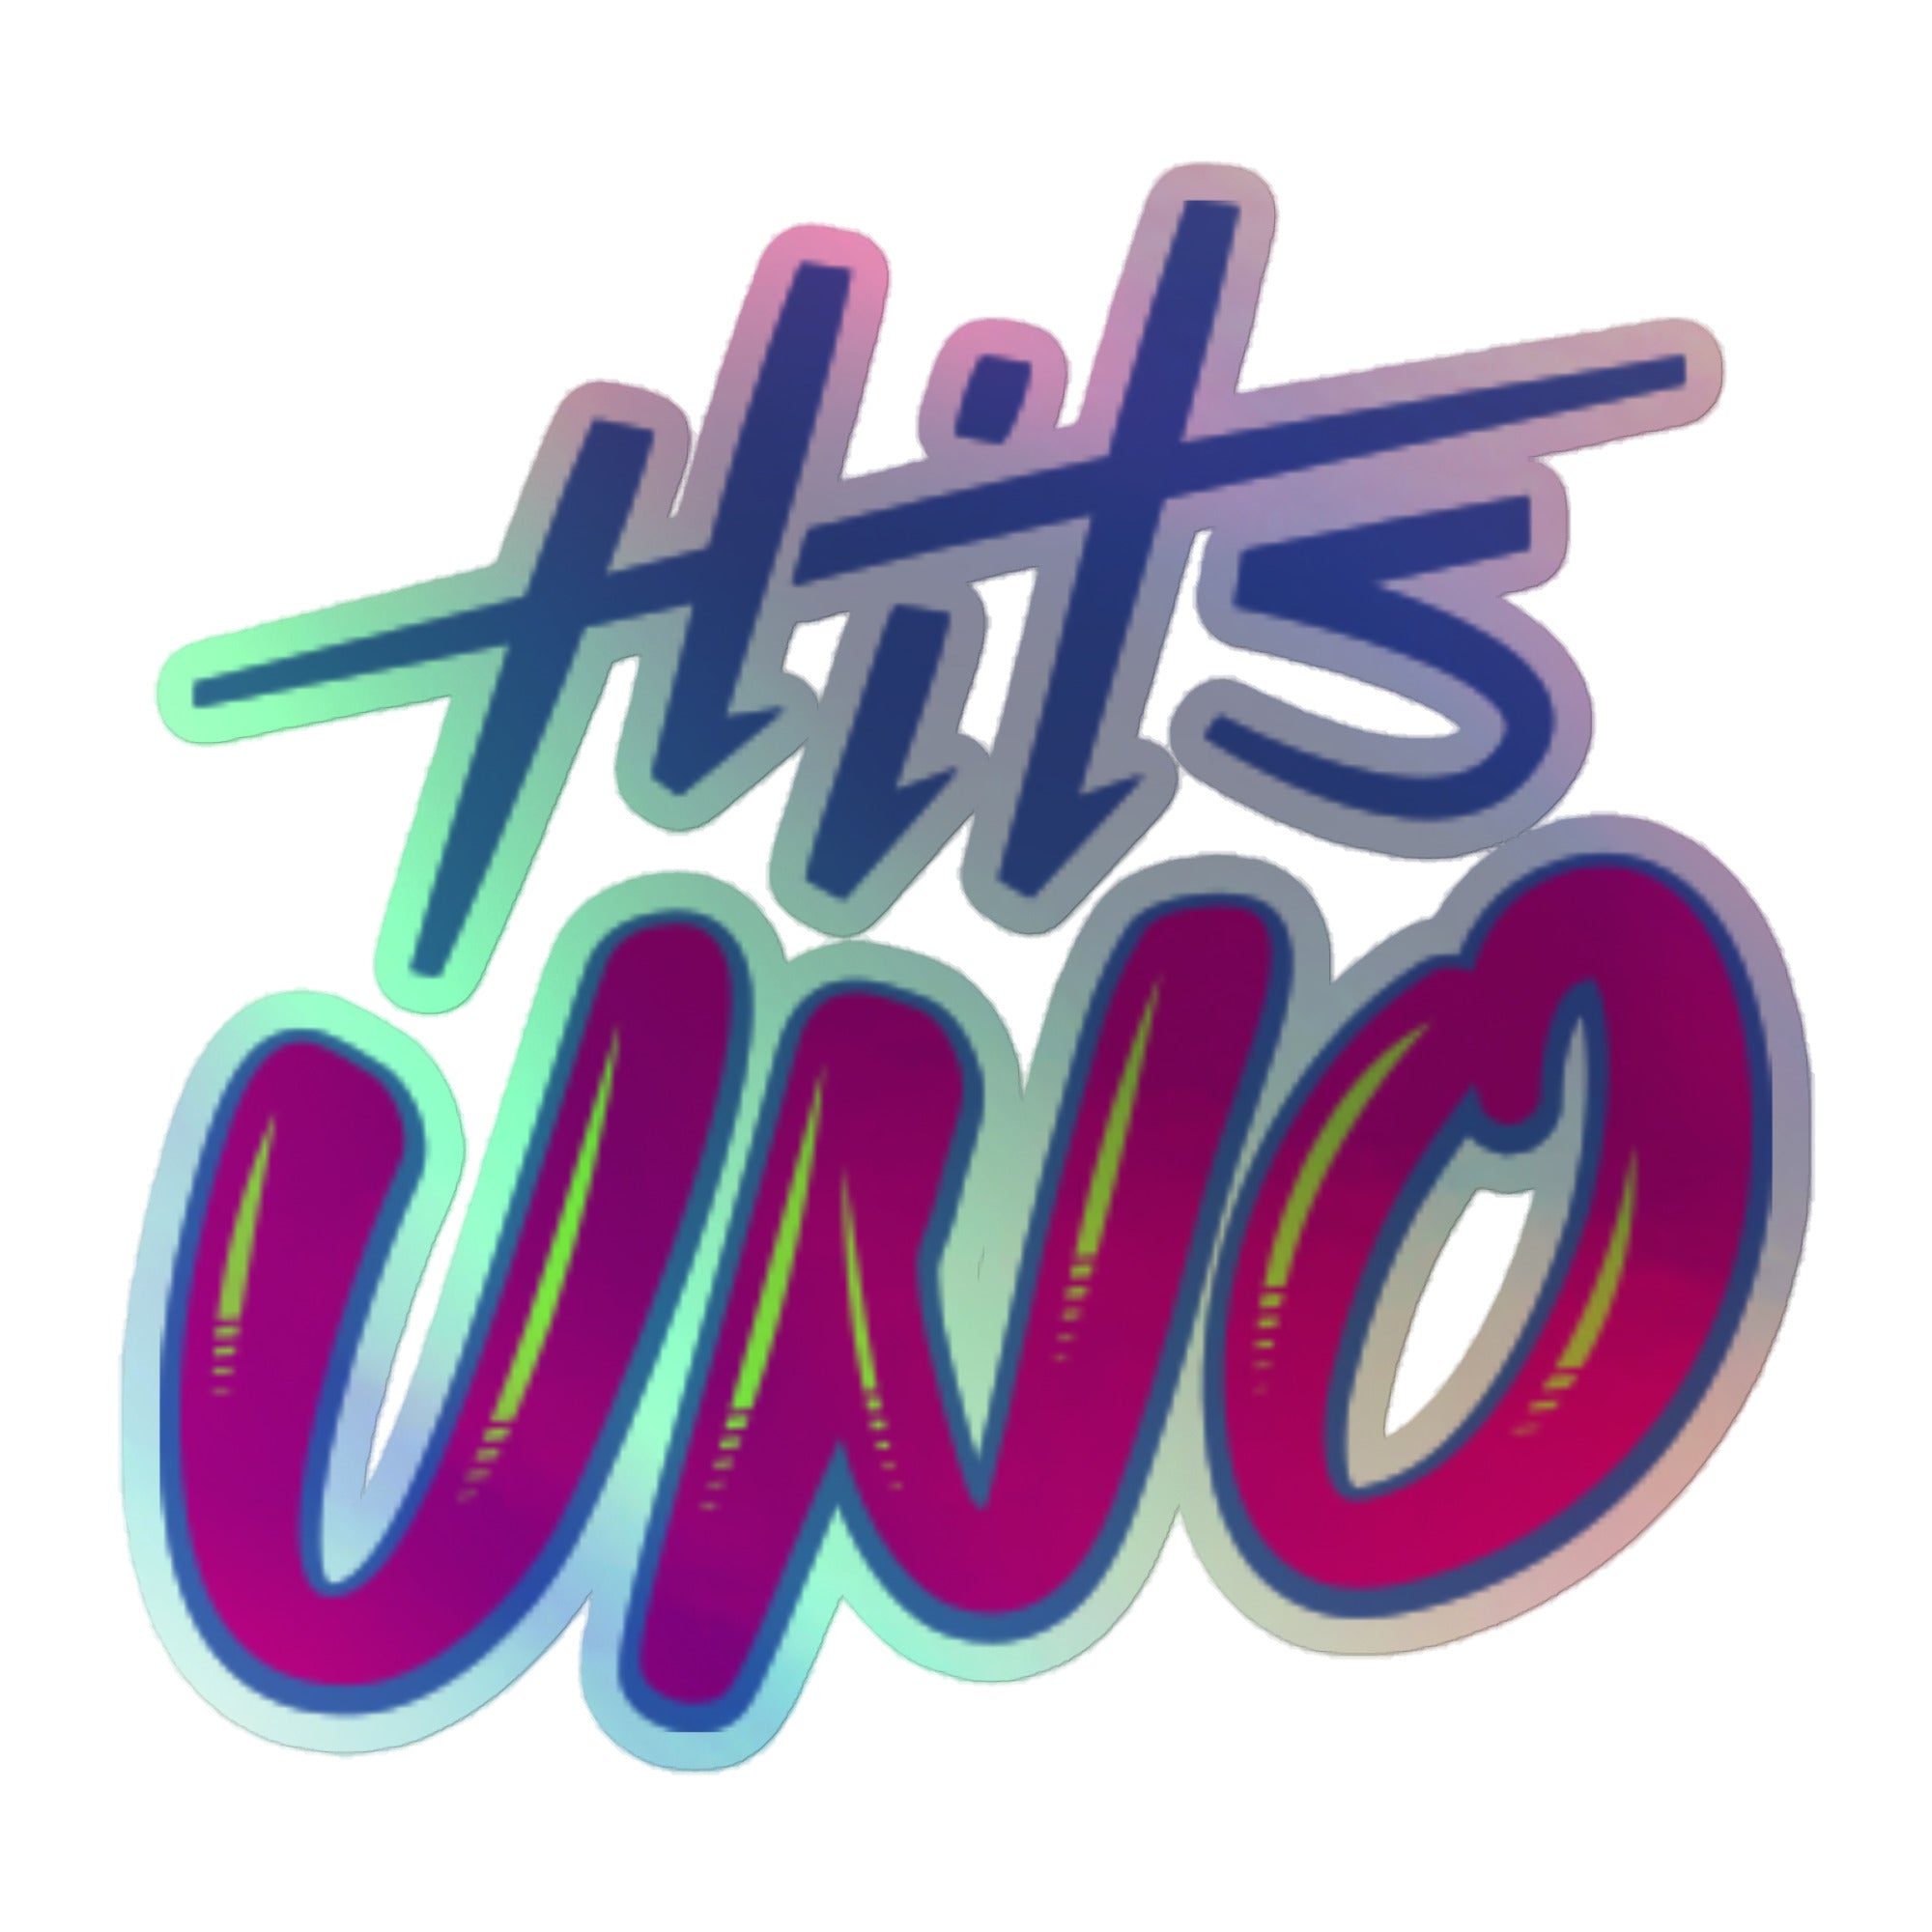 Hits Uno: Holographic Sticker